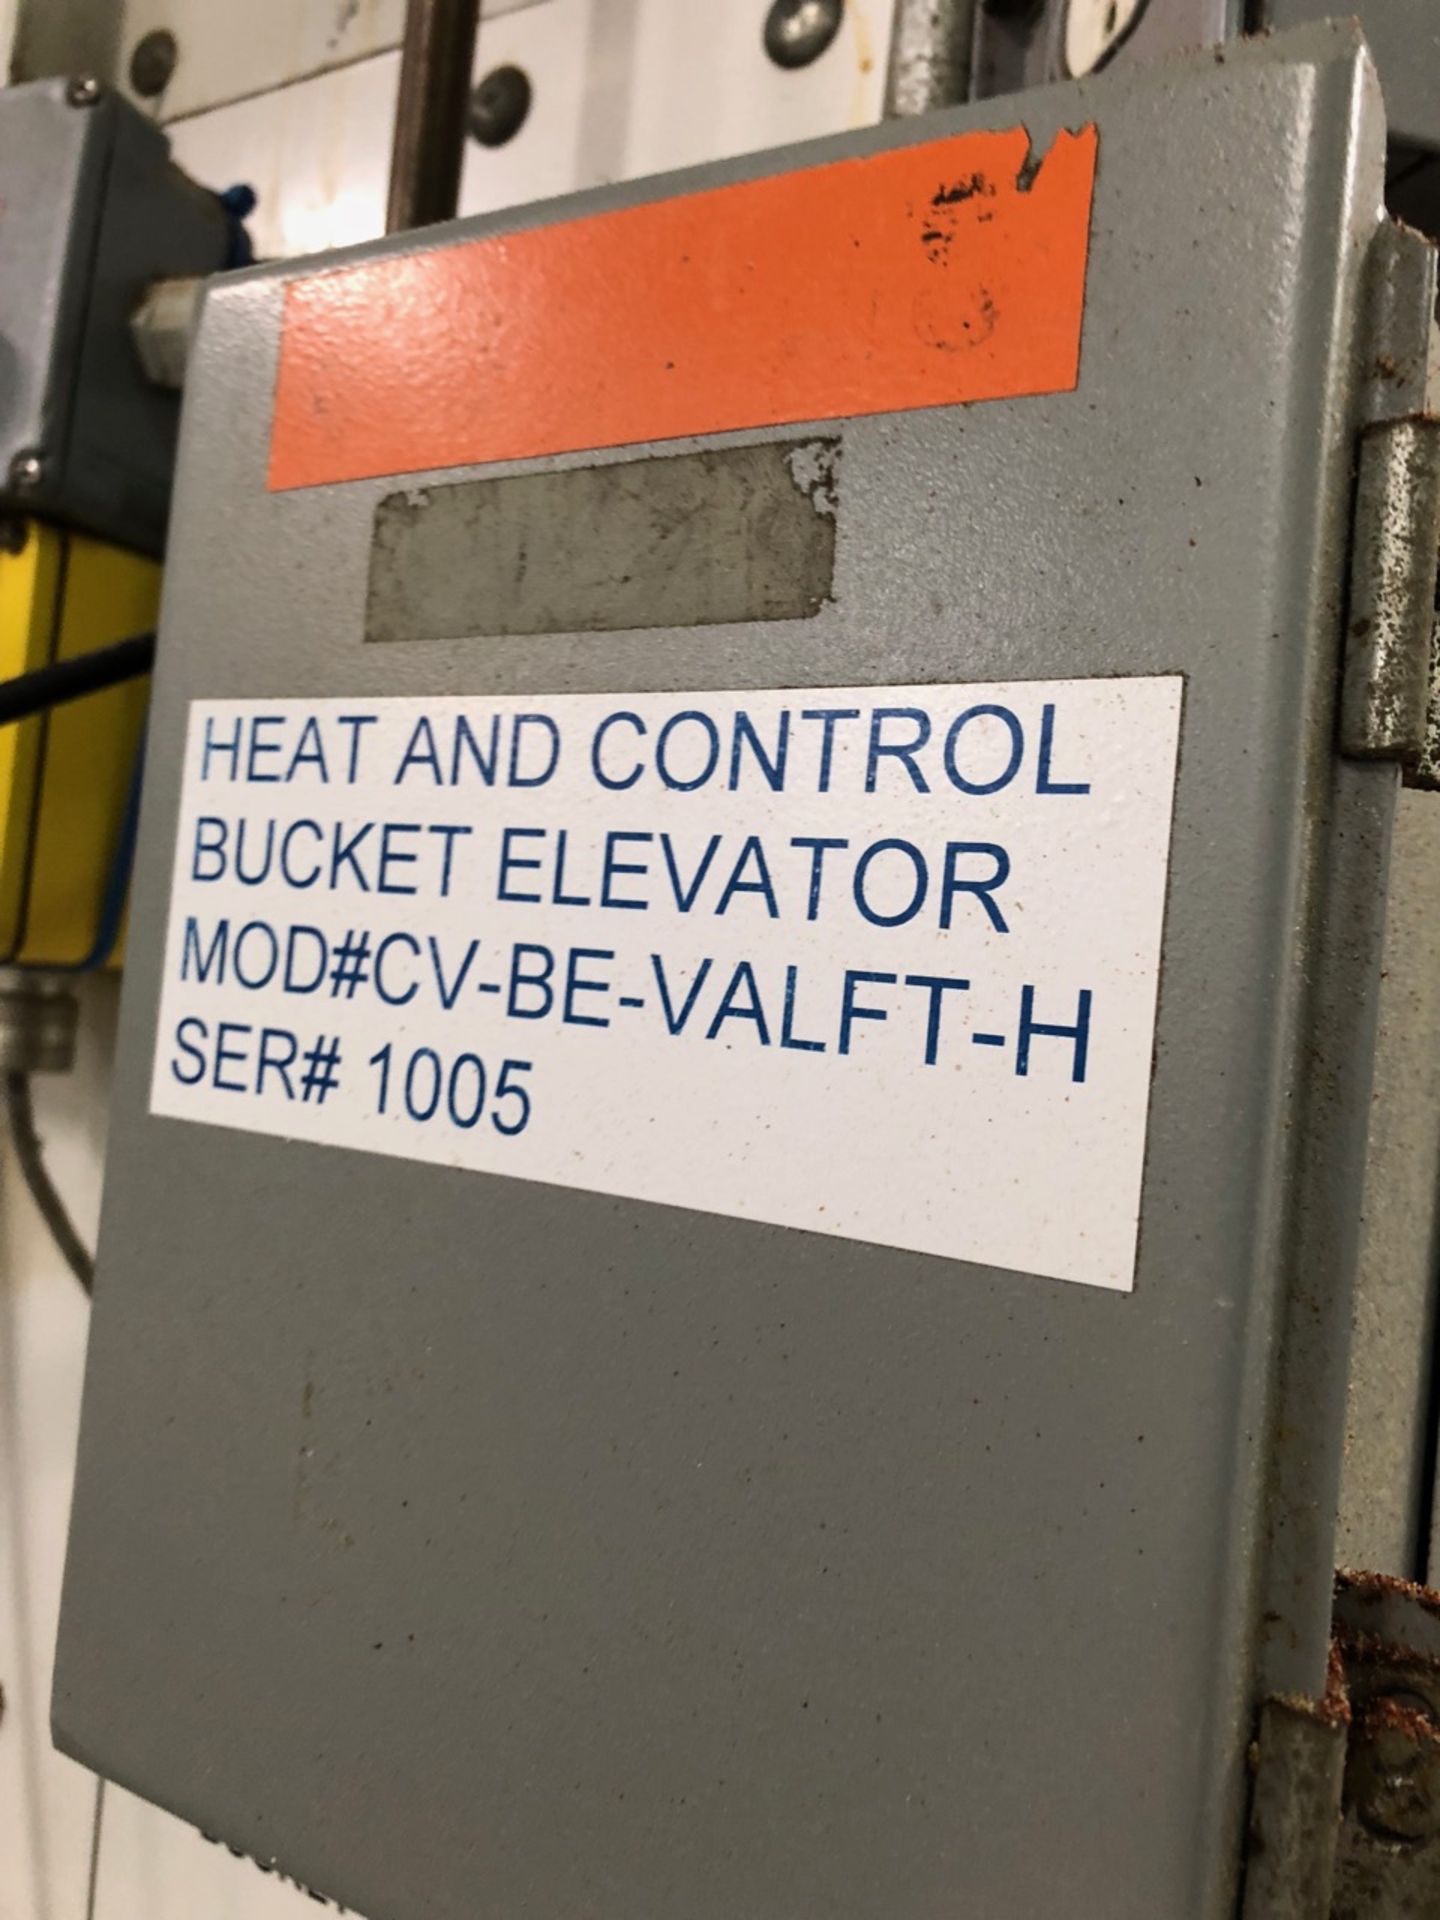 Heat and control bucket elevator - Image 2 of 5